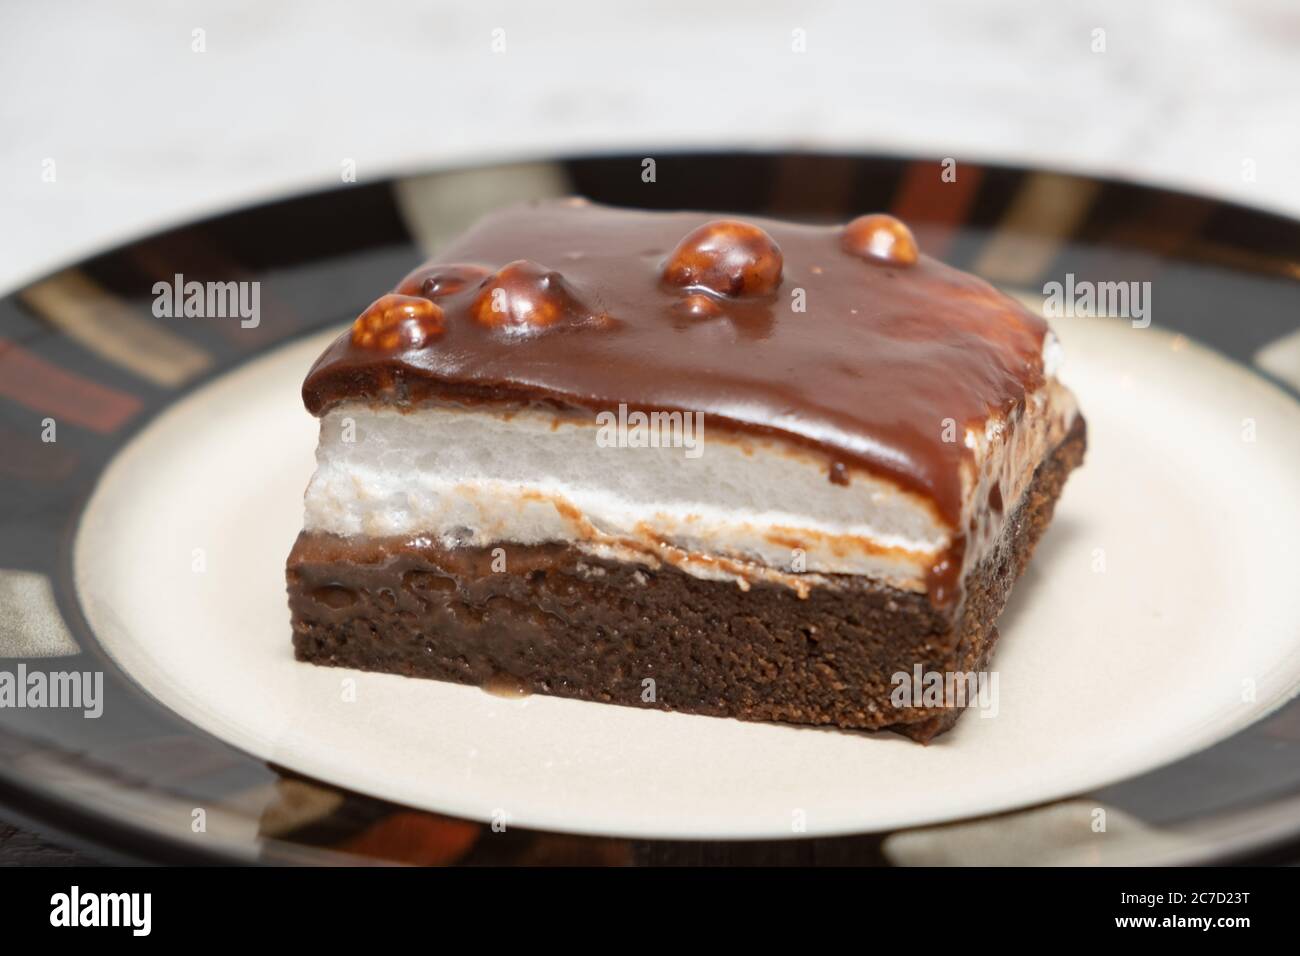 Chocolate and walnut cake Stock Photo